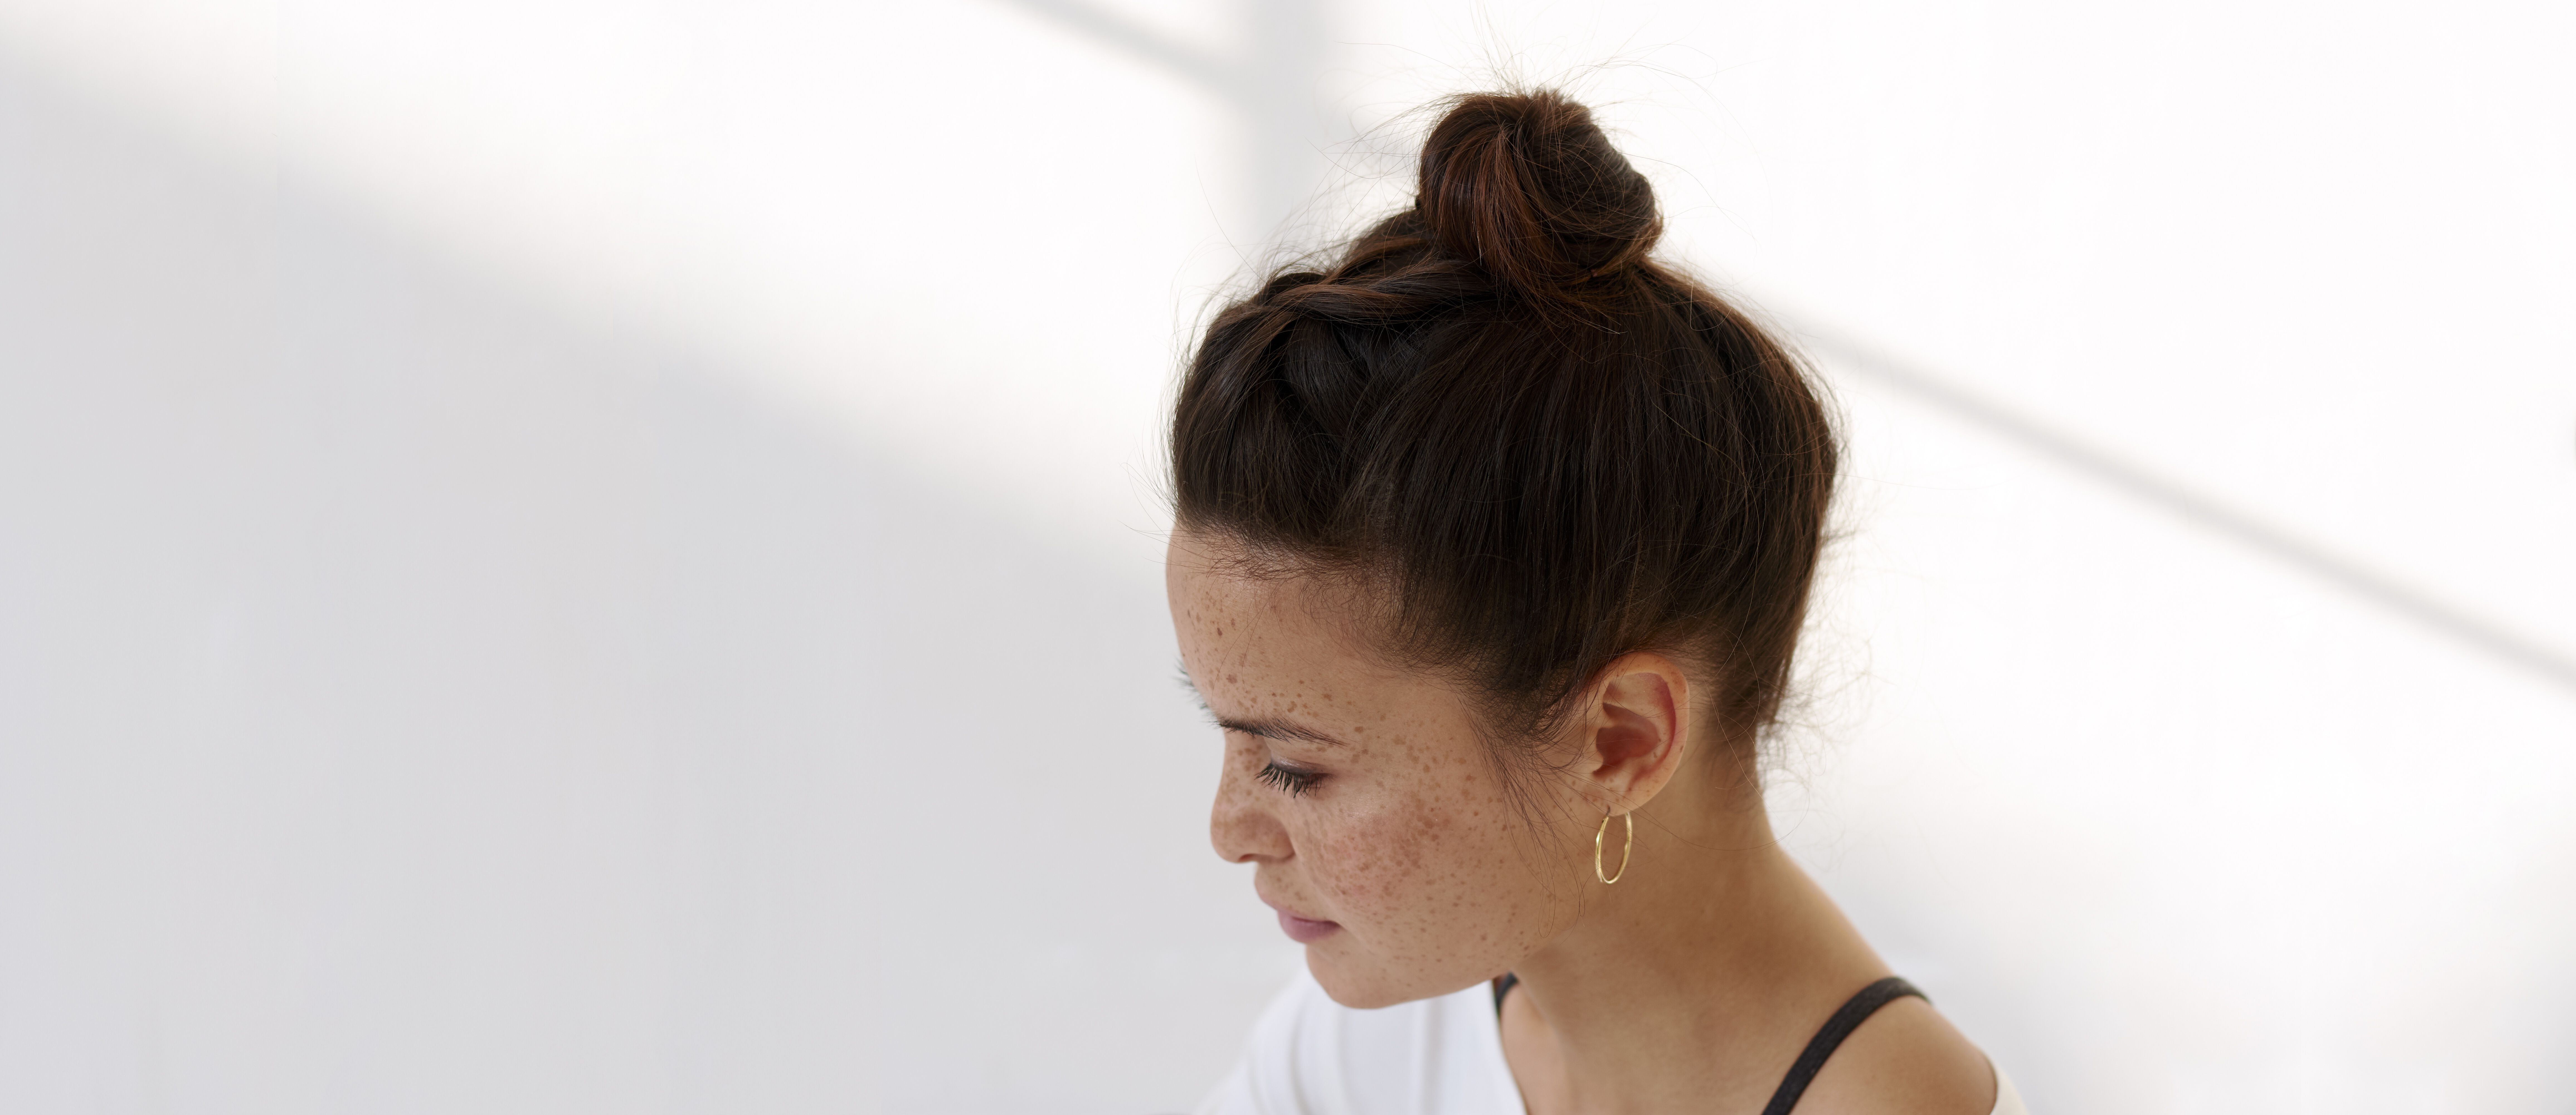 Summer hair hacks you’ll love from expert Carmen Zomers